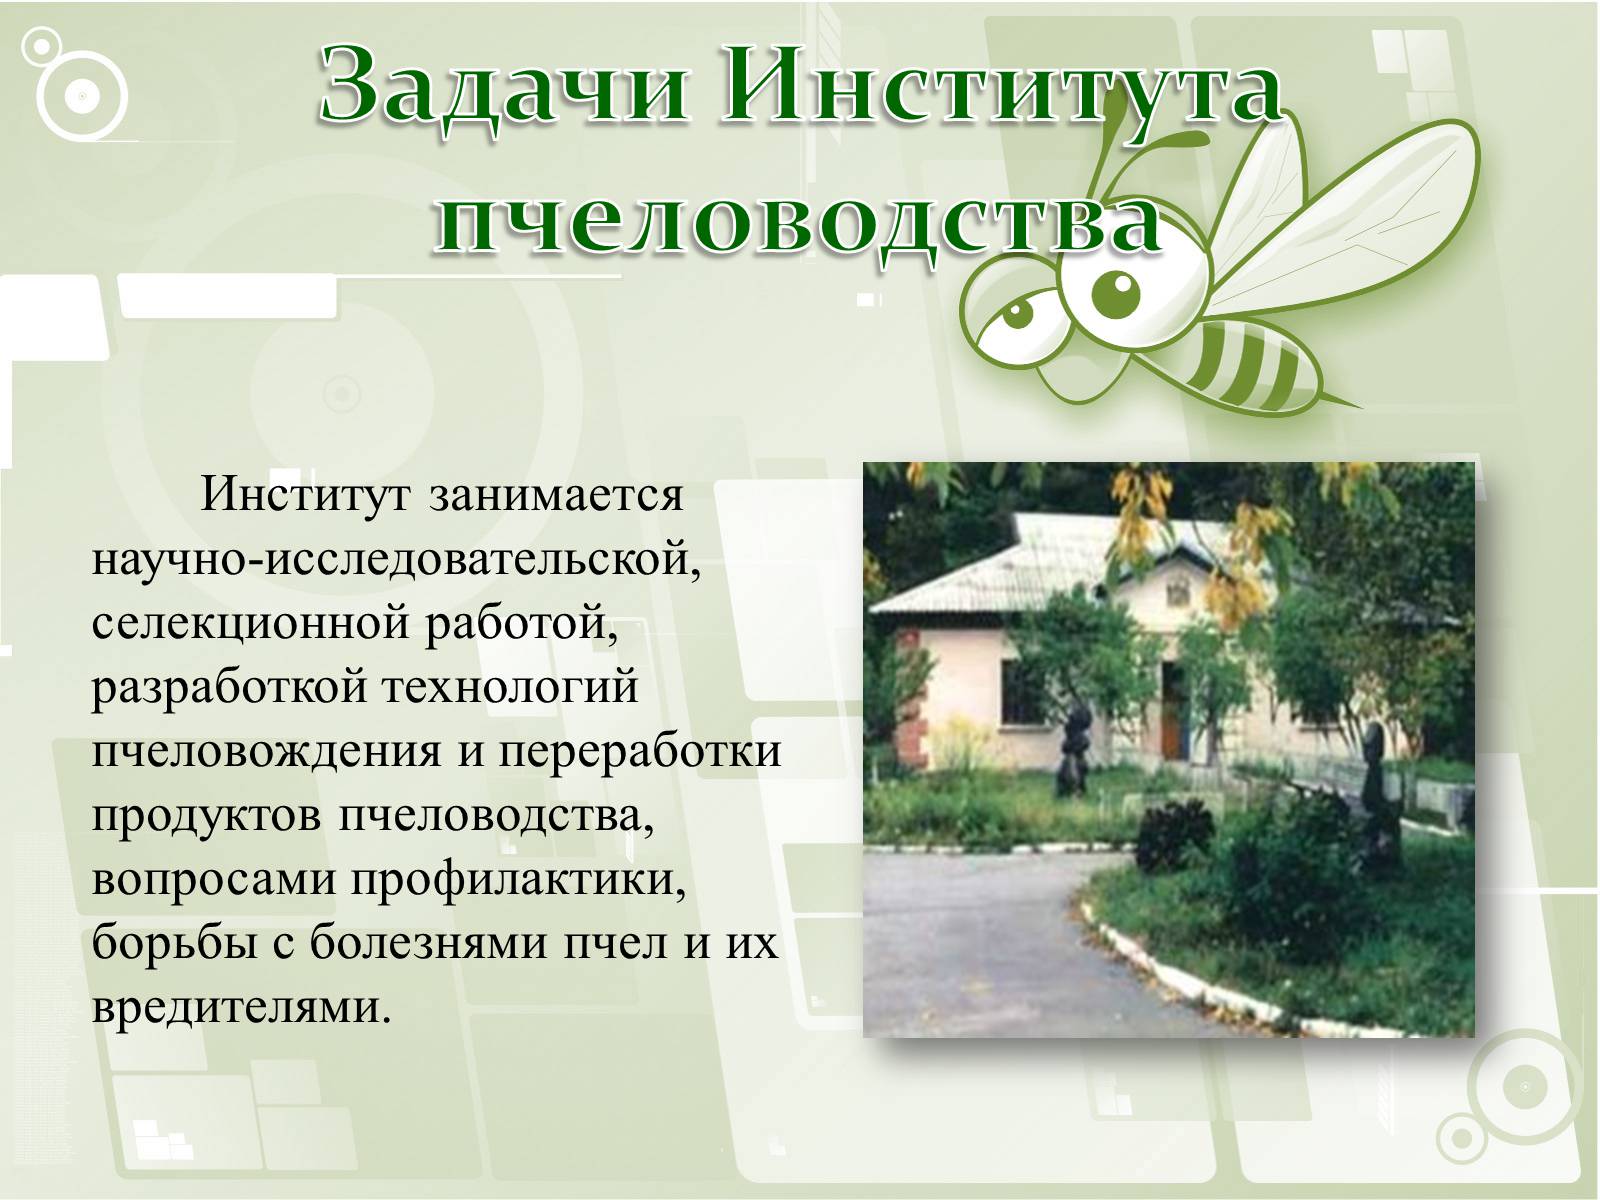 Презентація на тему «Национальный музей пчеловодства Украины» - Слайд #7